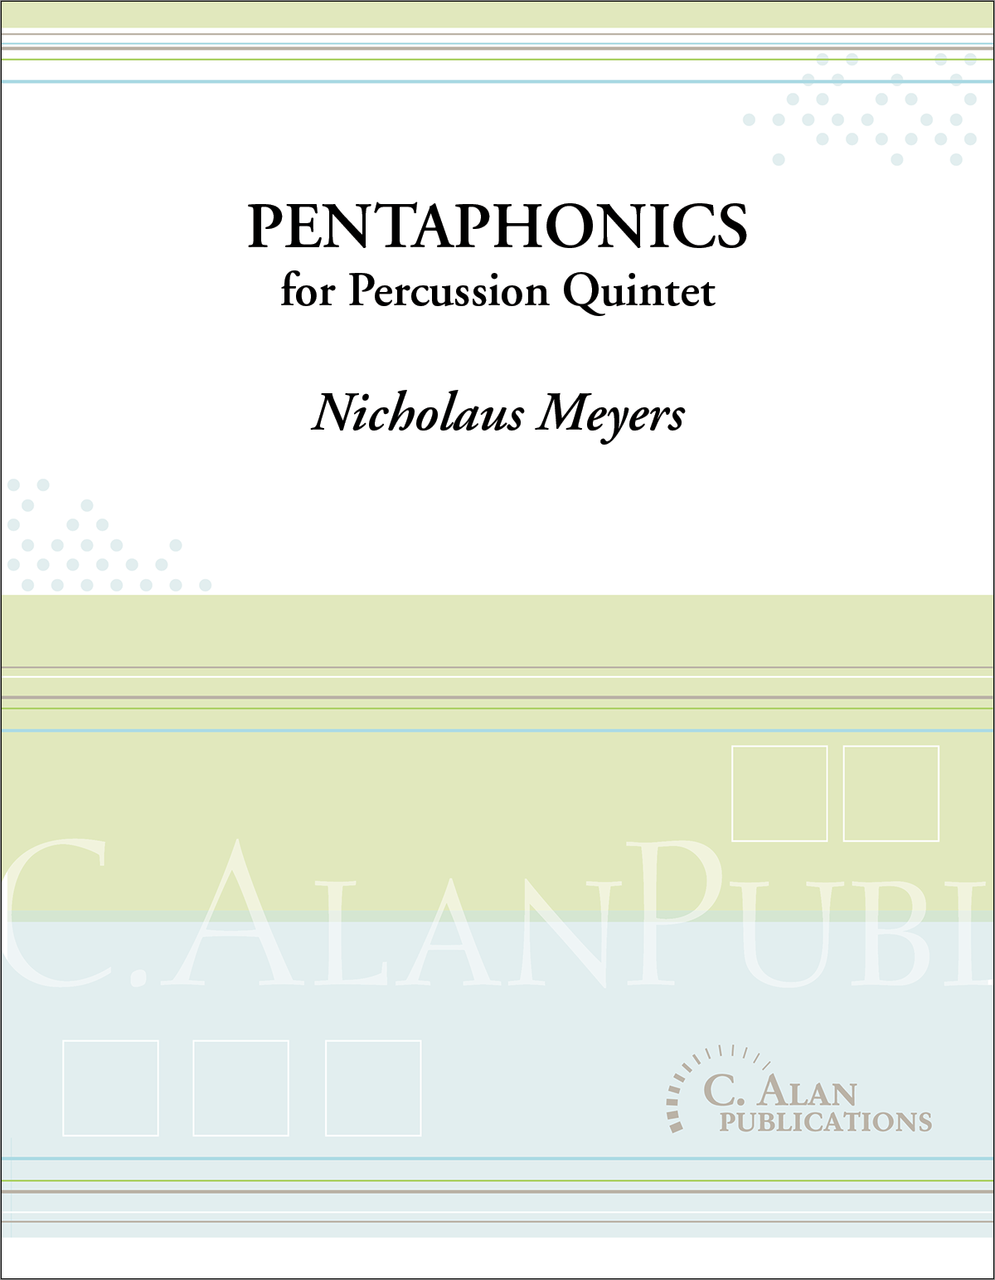 Pentaphonics by Nicholaus Meyers